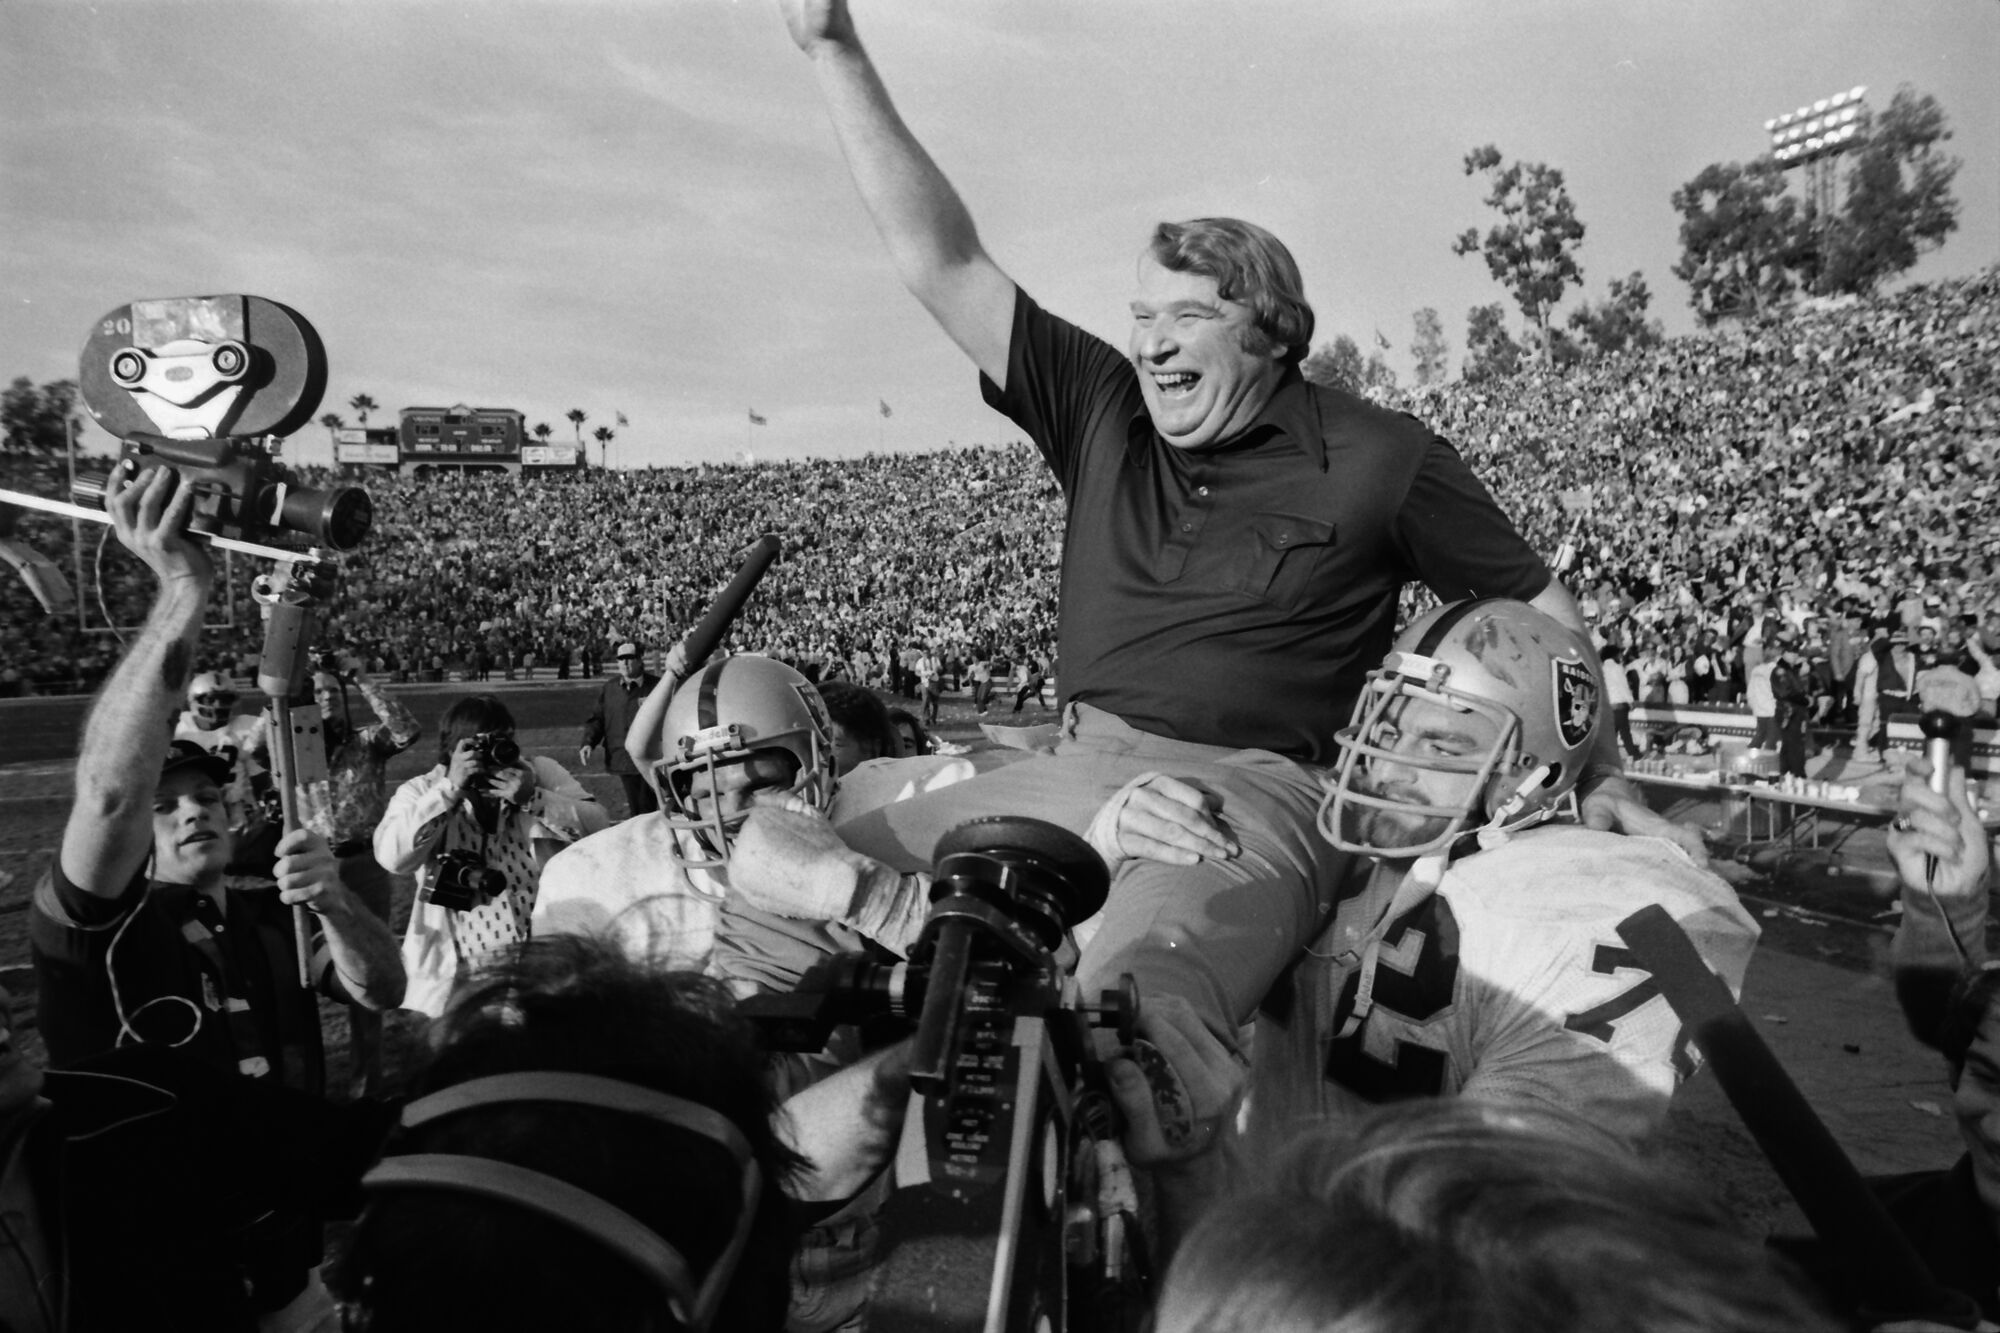 Photographer John Biever took this photo of Oakland Raiders coach John Madden